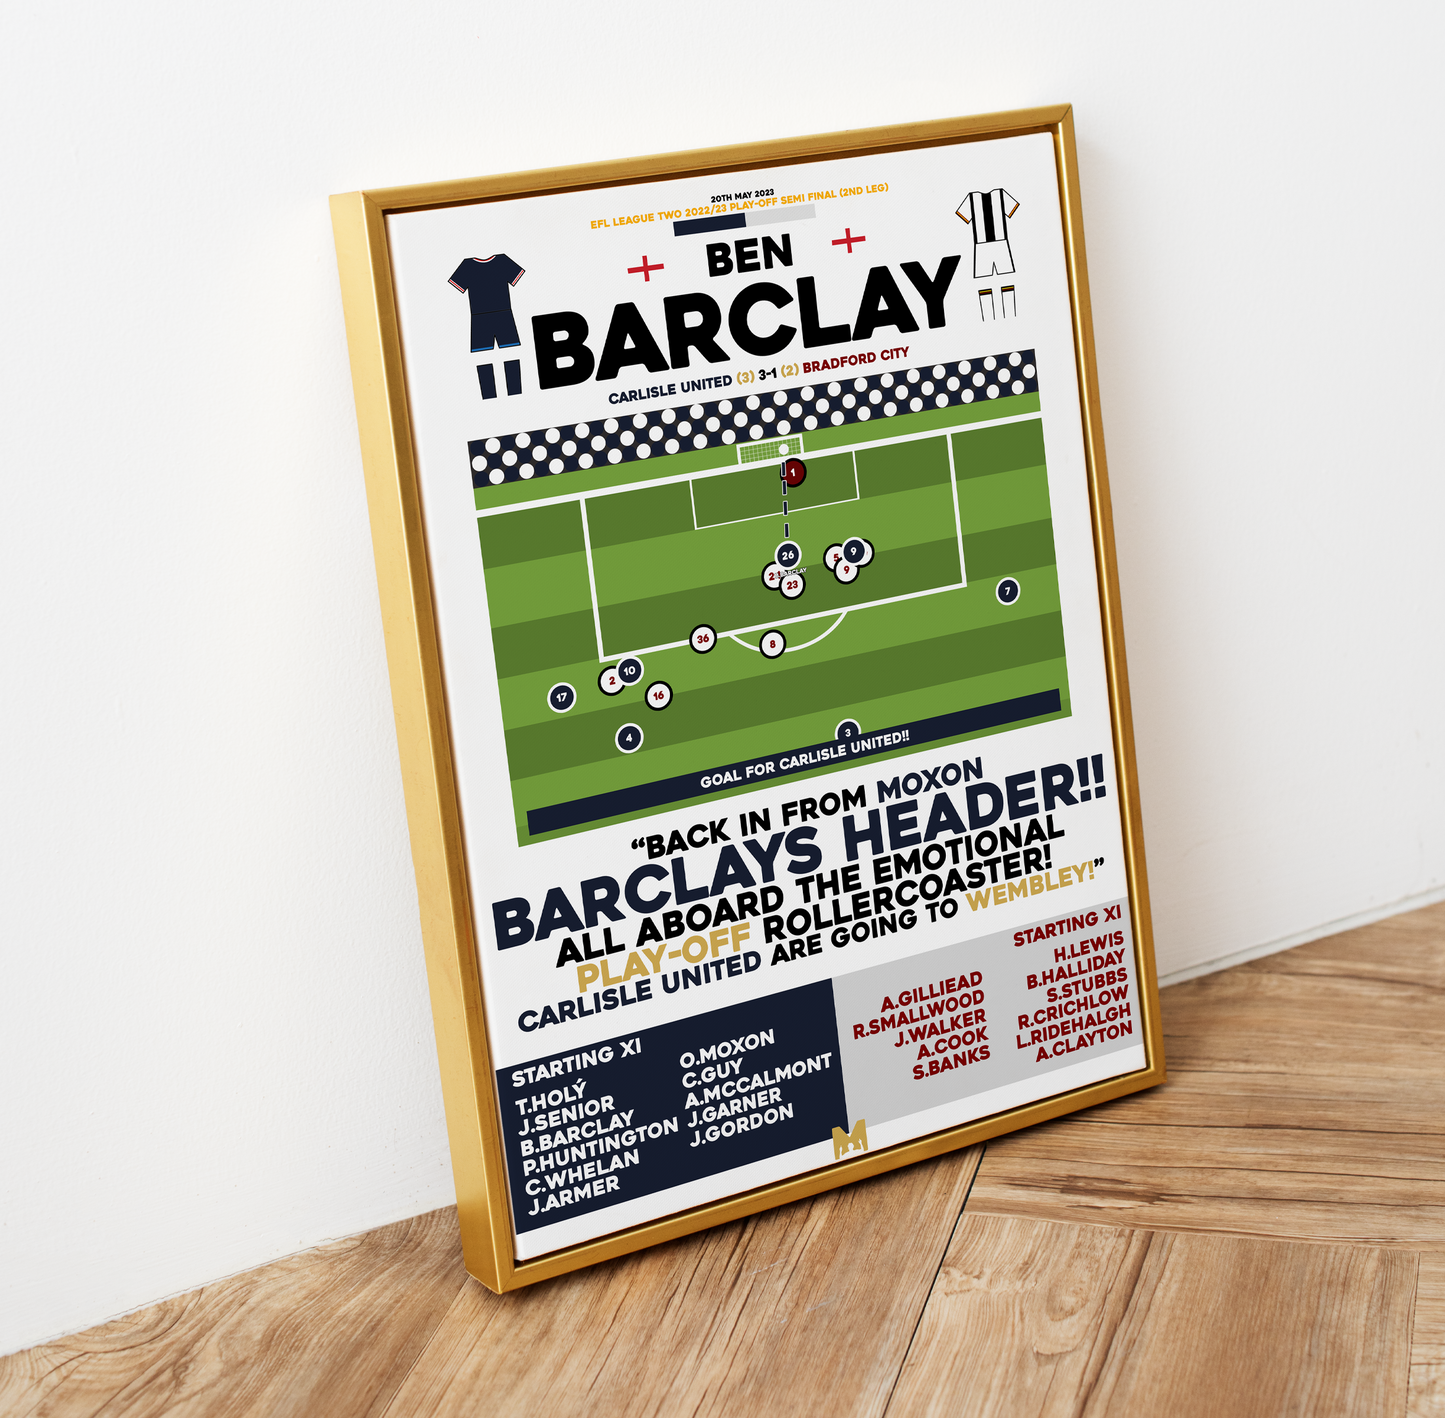 Ben Barclay Goal vs Bradford City - League Two Play-Offs 2022/23 - Carlisle United